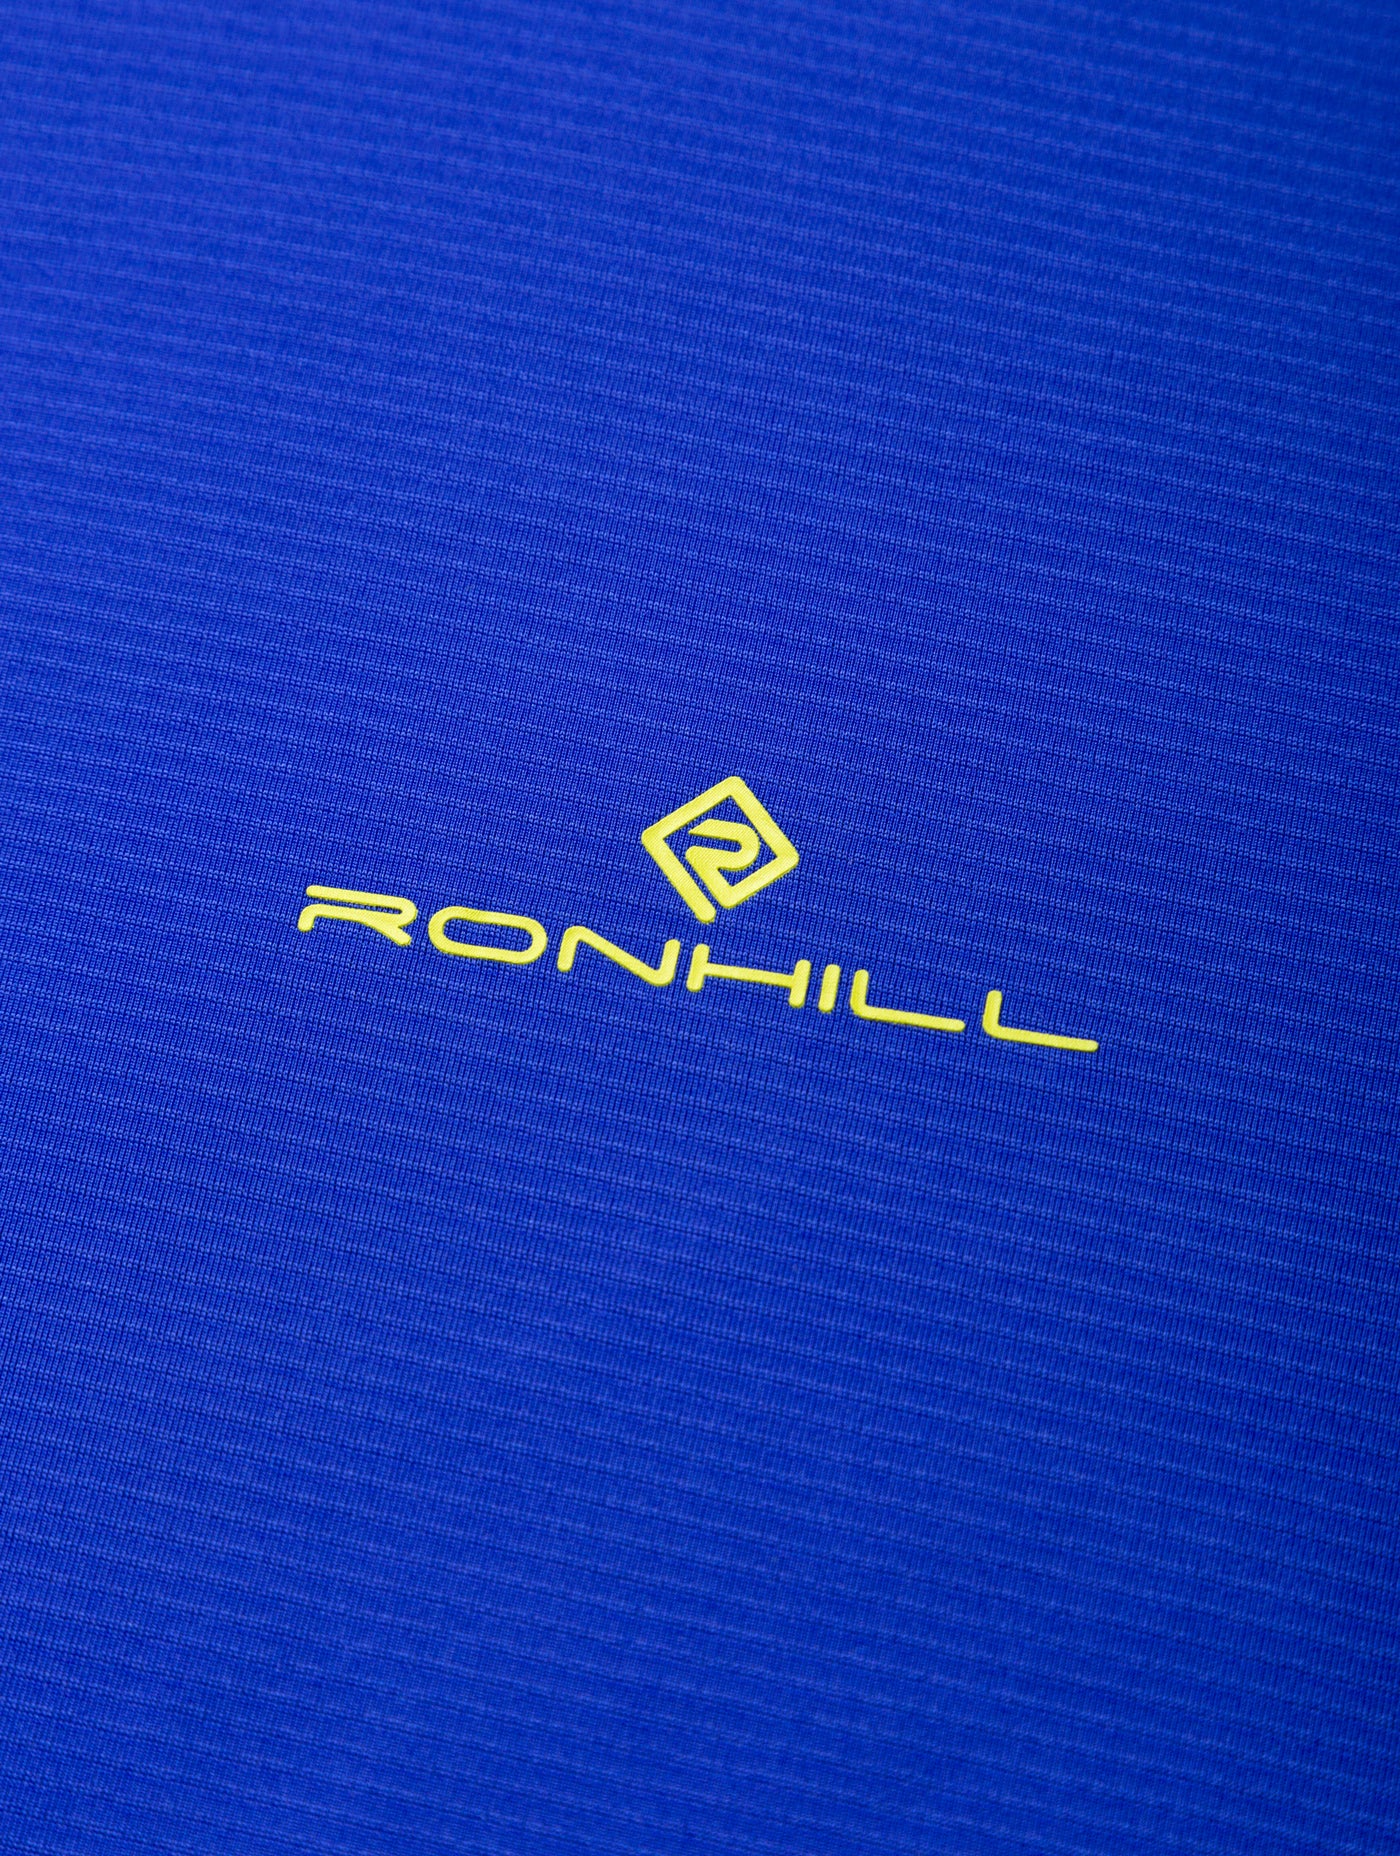 RonHill Mens Tech S/S Tee - Azurite/Citrus